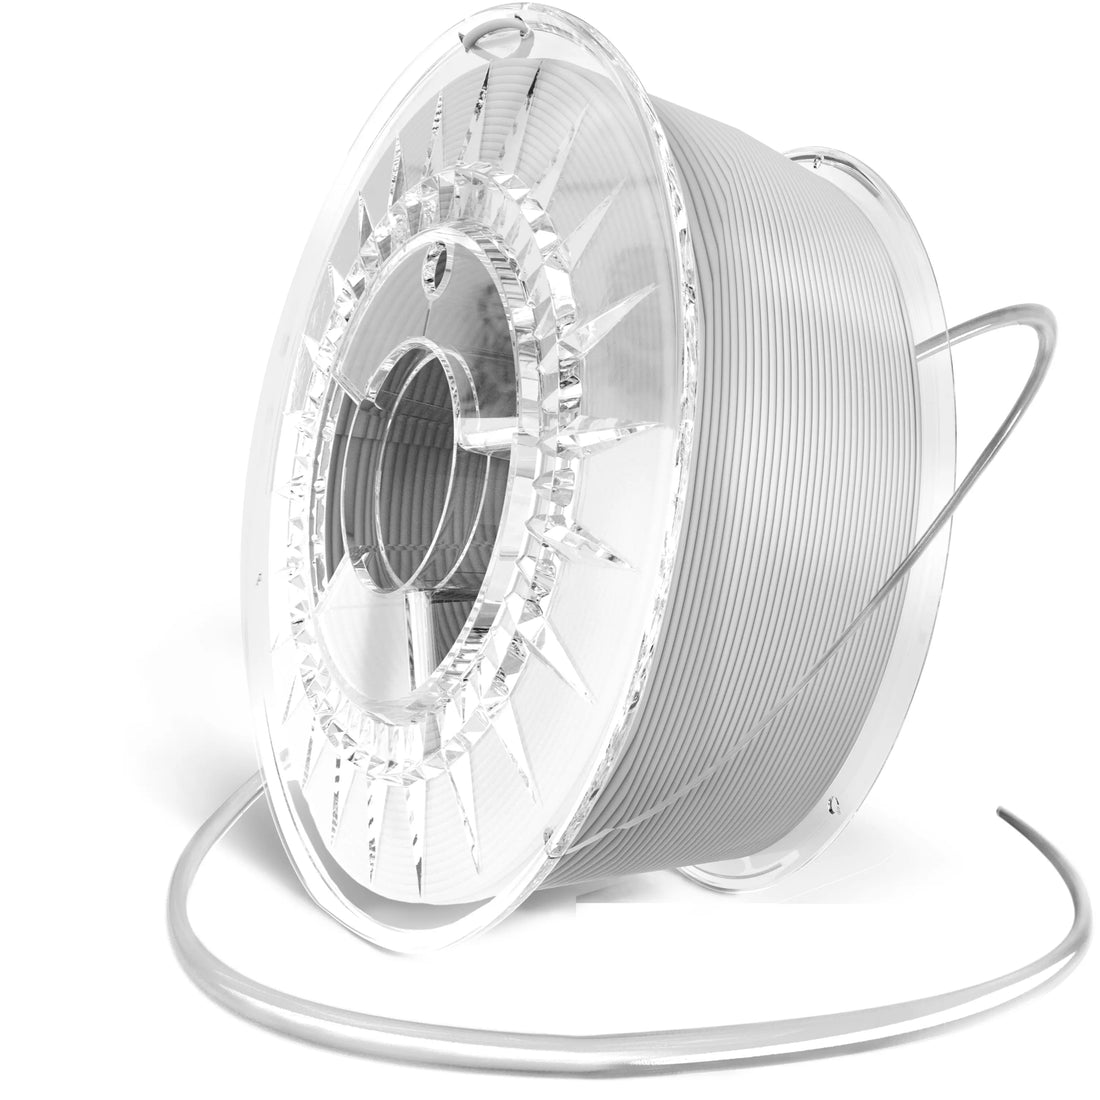 Vision 3D® PETG Filament Light Gray